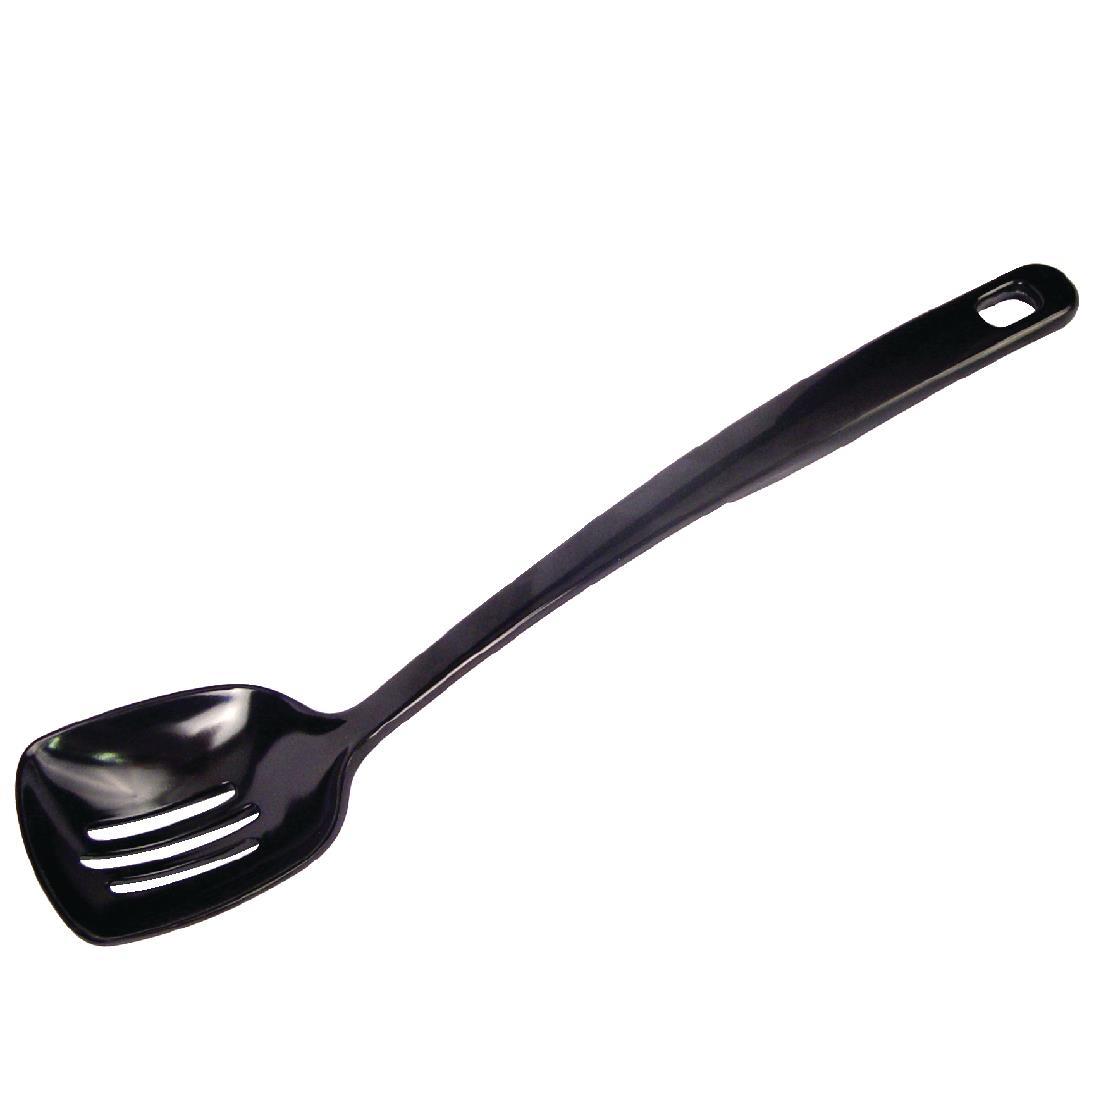 Black Slotted Serving Spoon 12" - J635  - 1